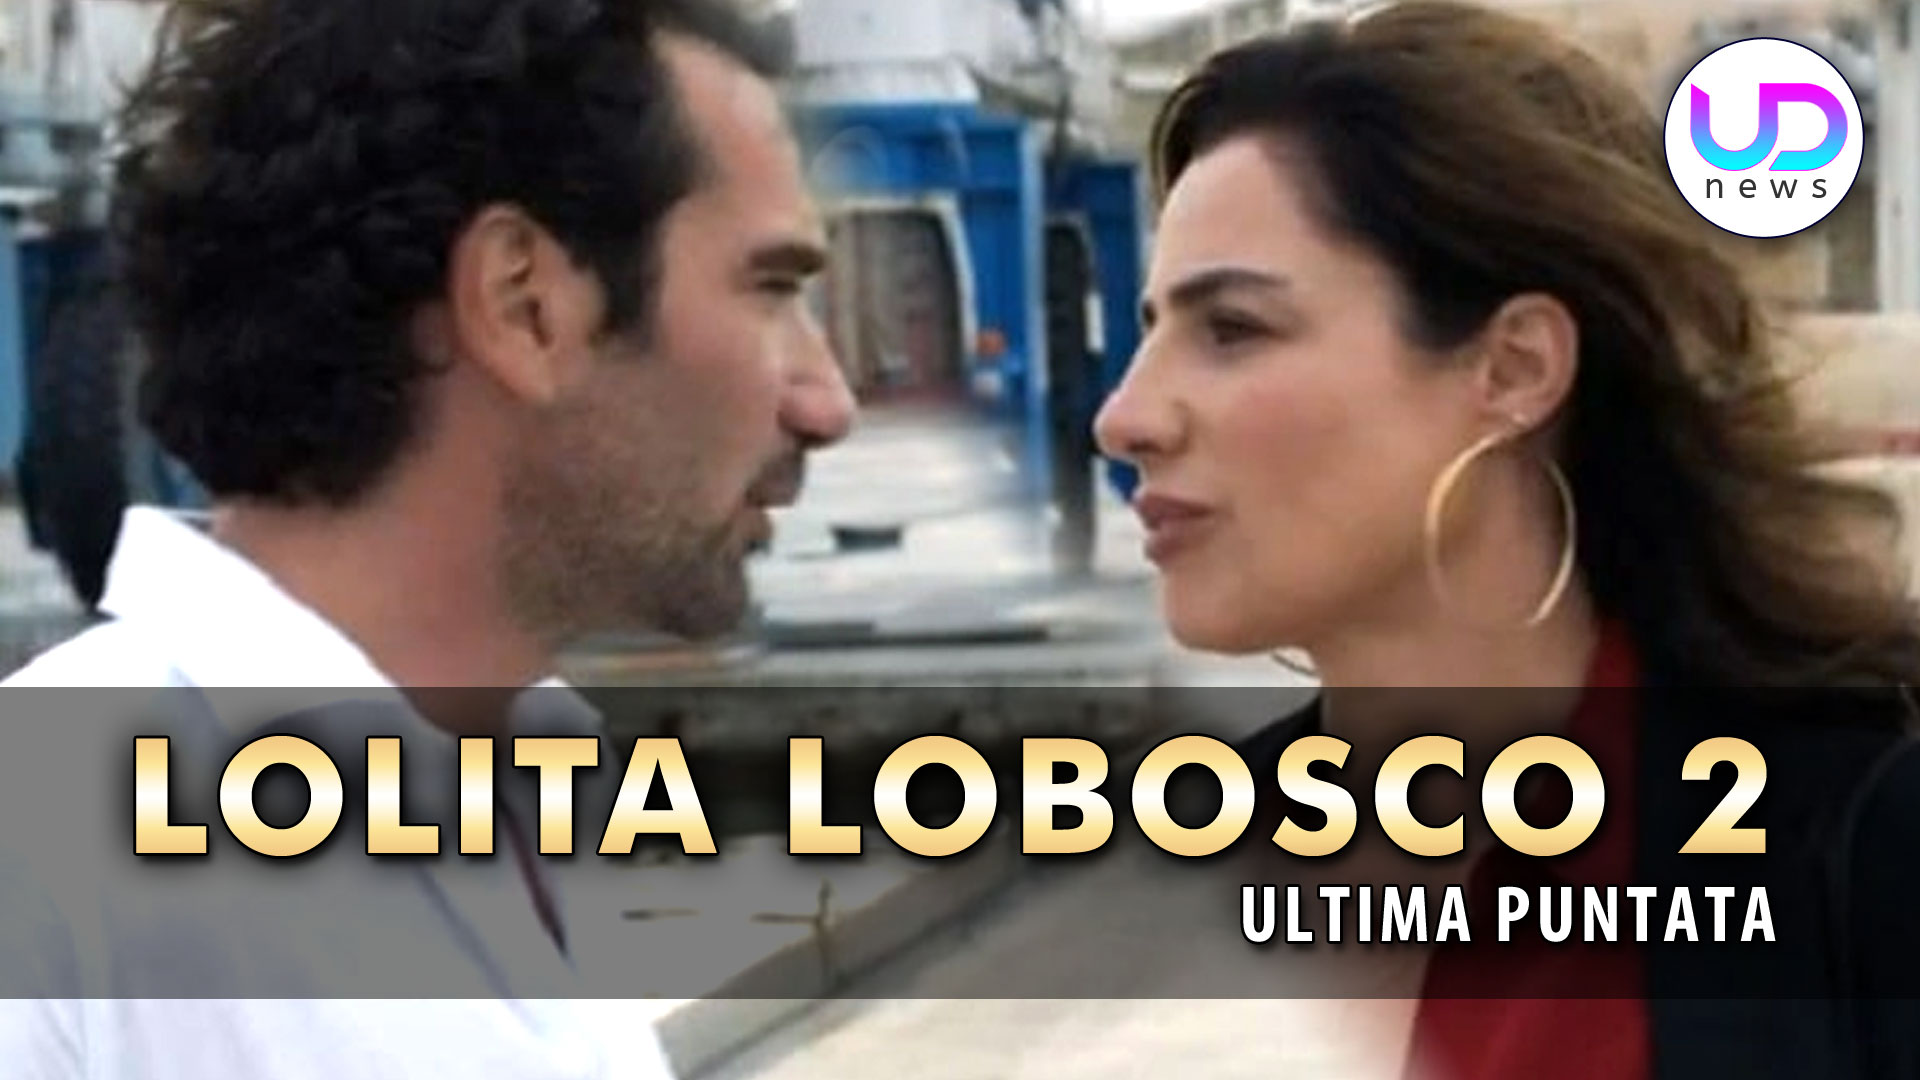 lolita-lobosco-2,-ultima-puntata:-lolita-innamorata-di-angelo!-–-ud-news